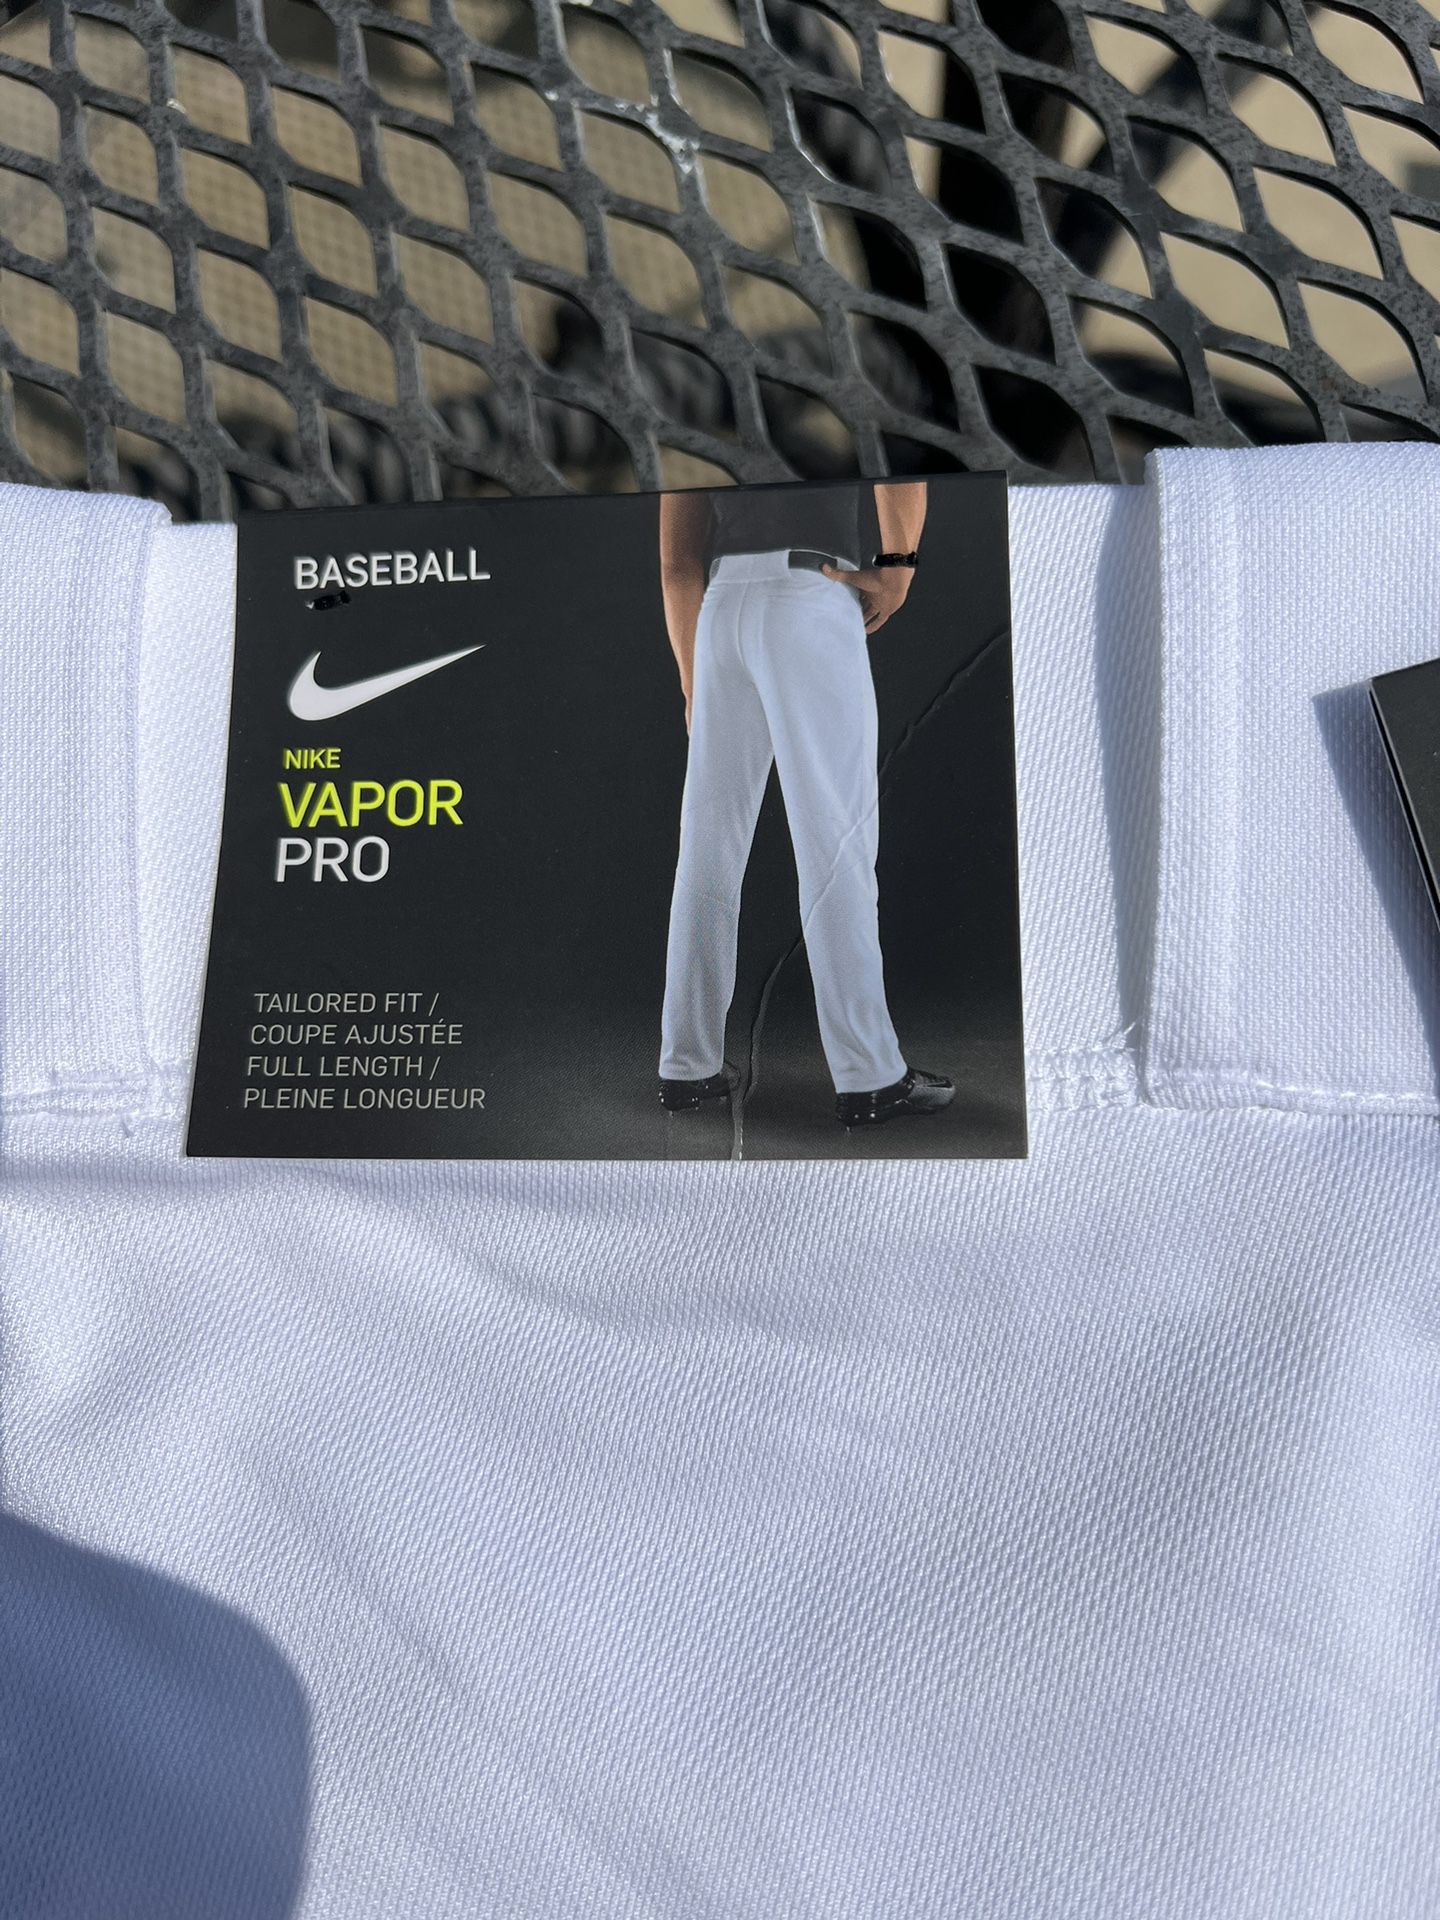 Nike Boys Baseball Pants Vapor Pro Large 